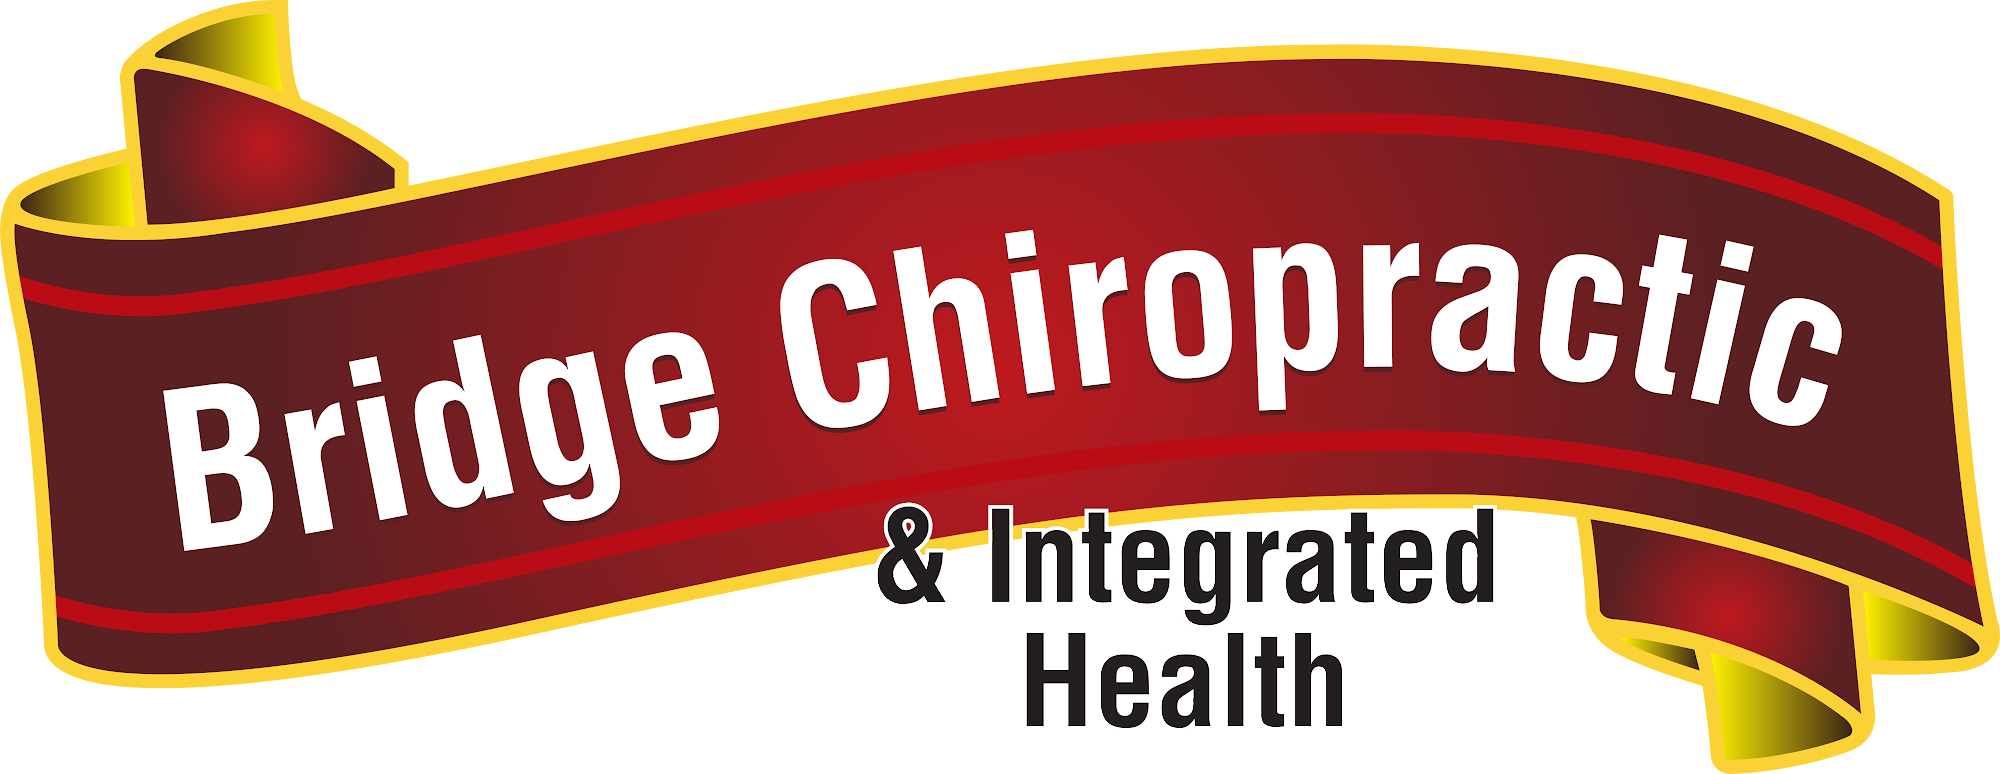 Bridge Chiropractic & Integrated Health, LLC - Dr. McPharlin & Dr. Calvert